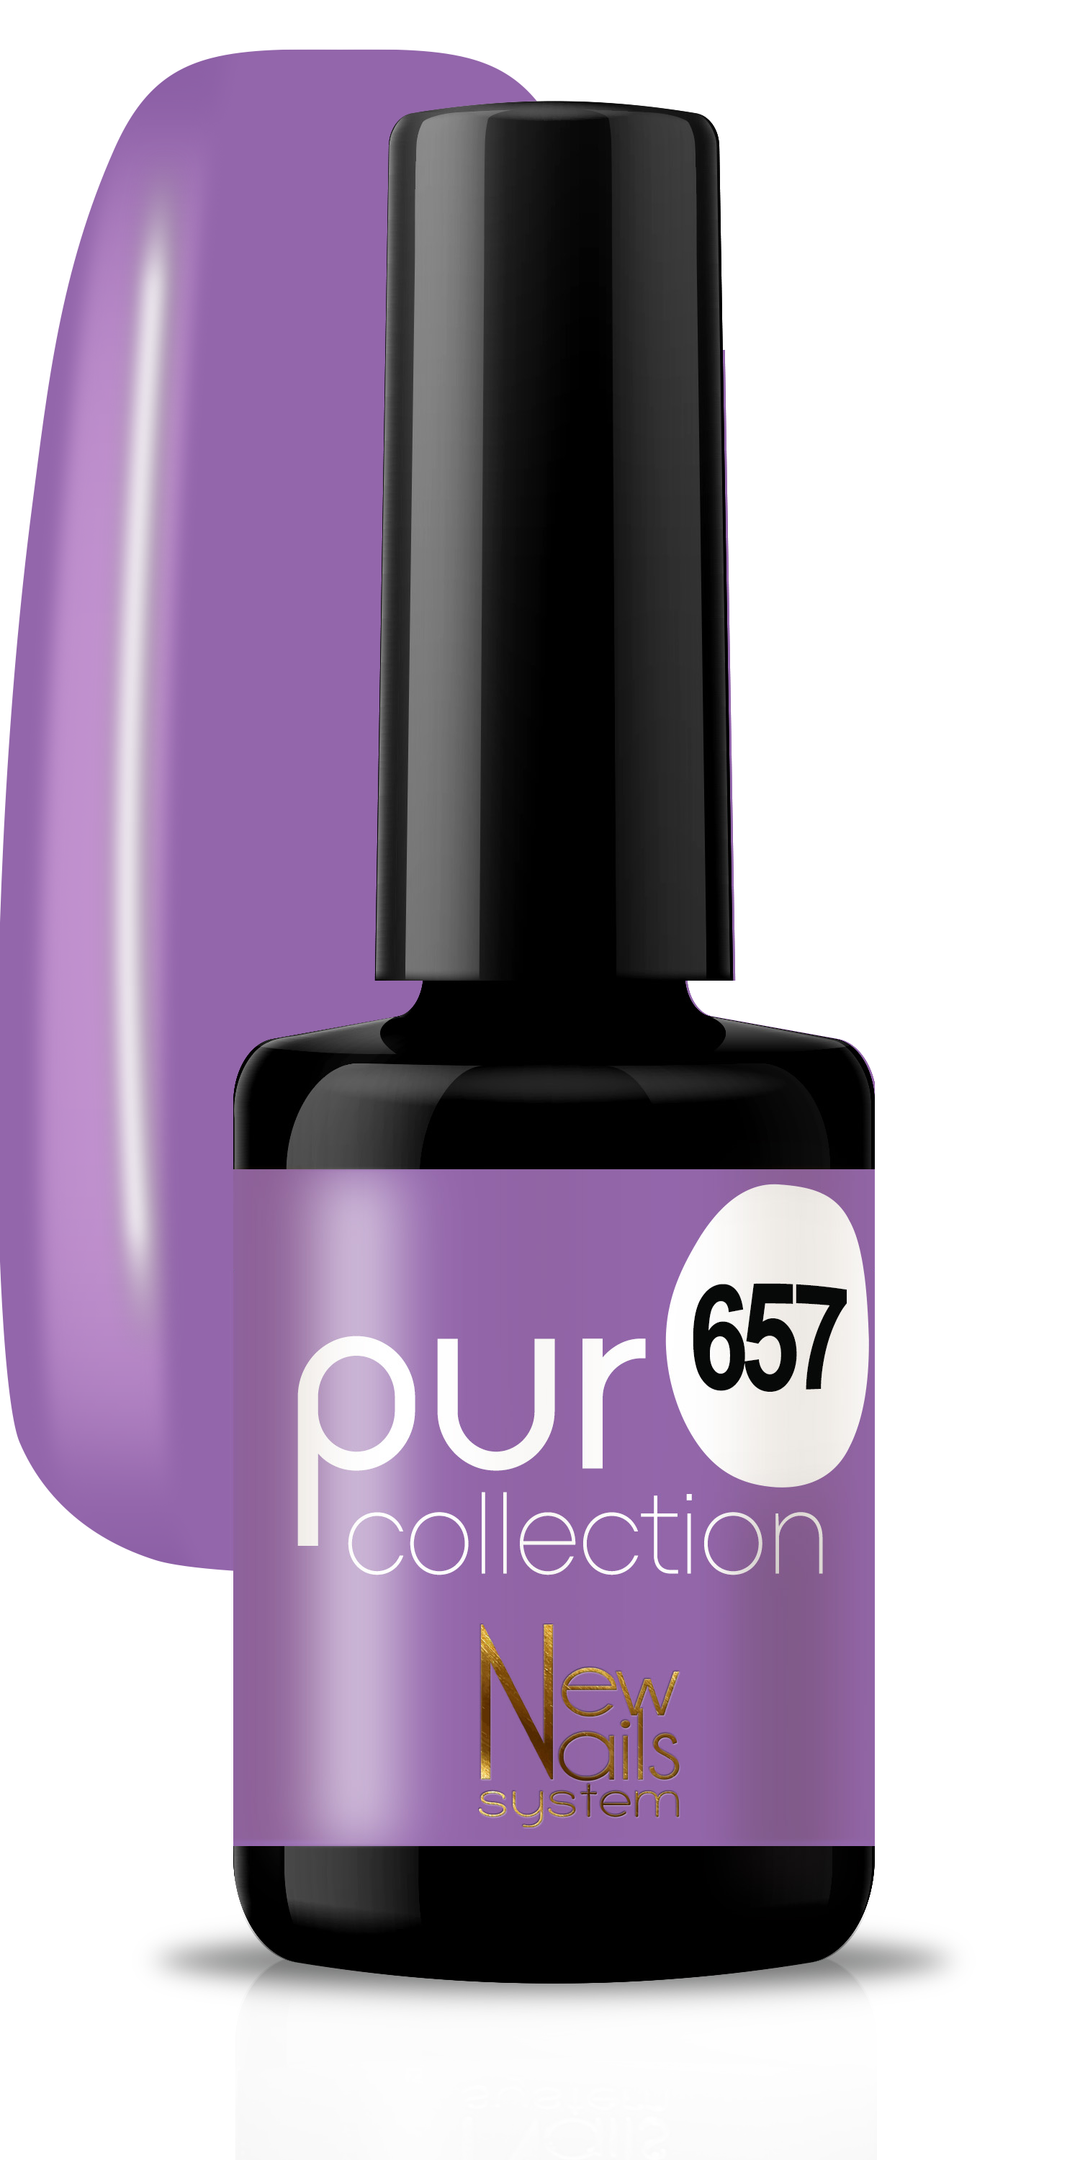 Puro collection Peryvinkle 657 gel polish 5ml